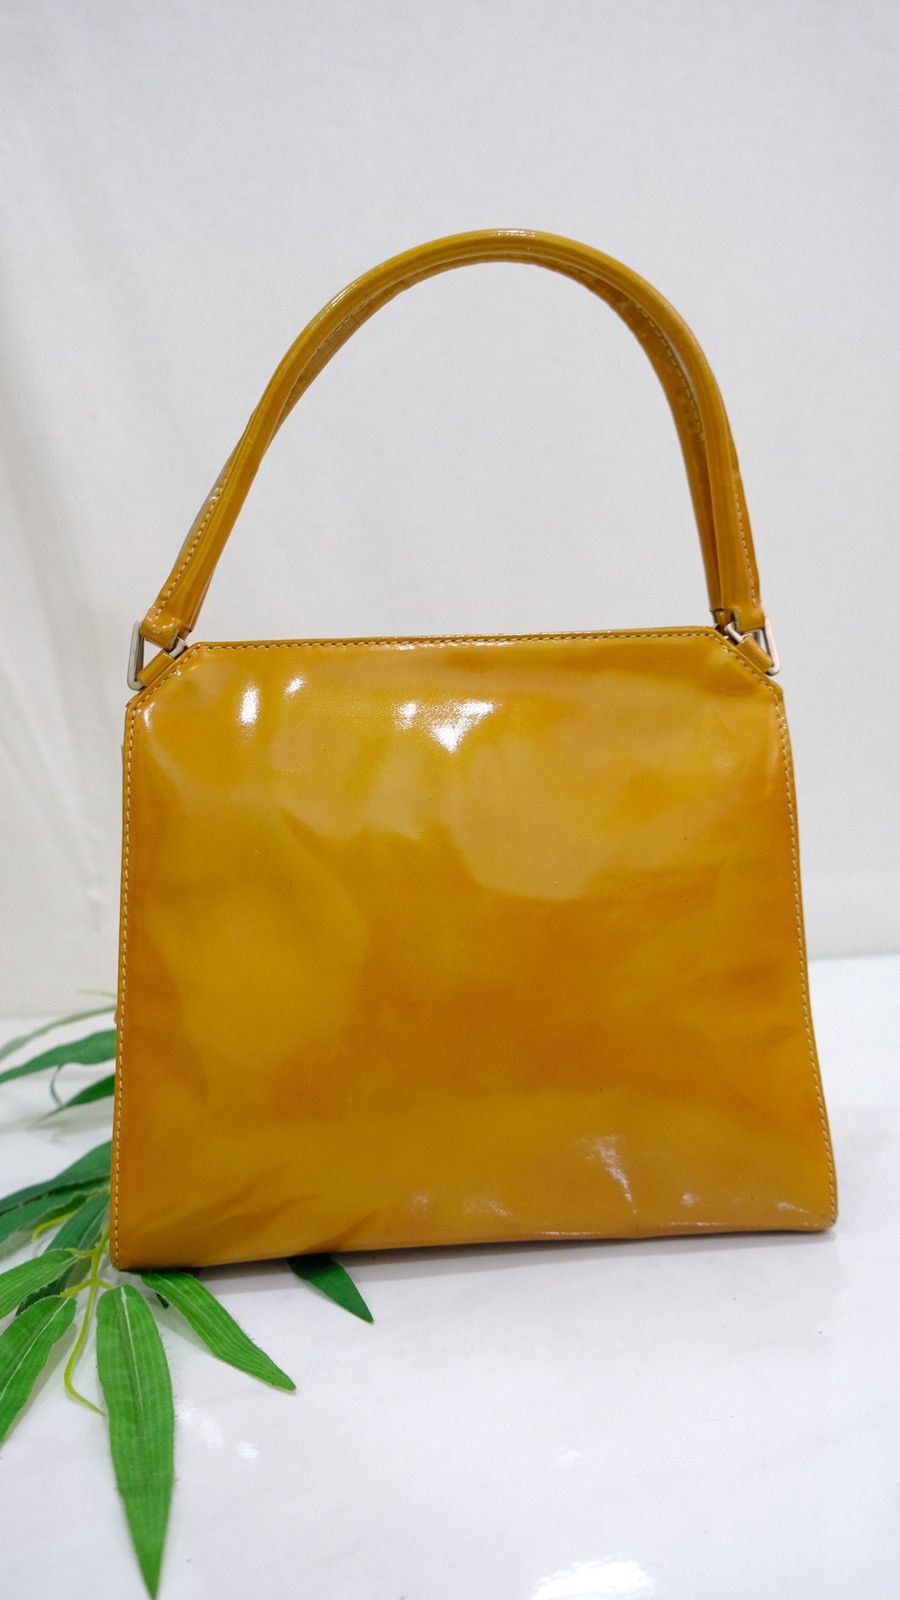 Authentic Prada handbag yellow pattern leather - 3